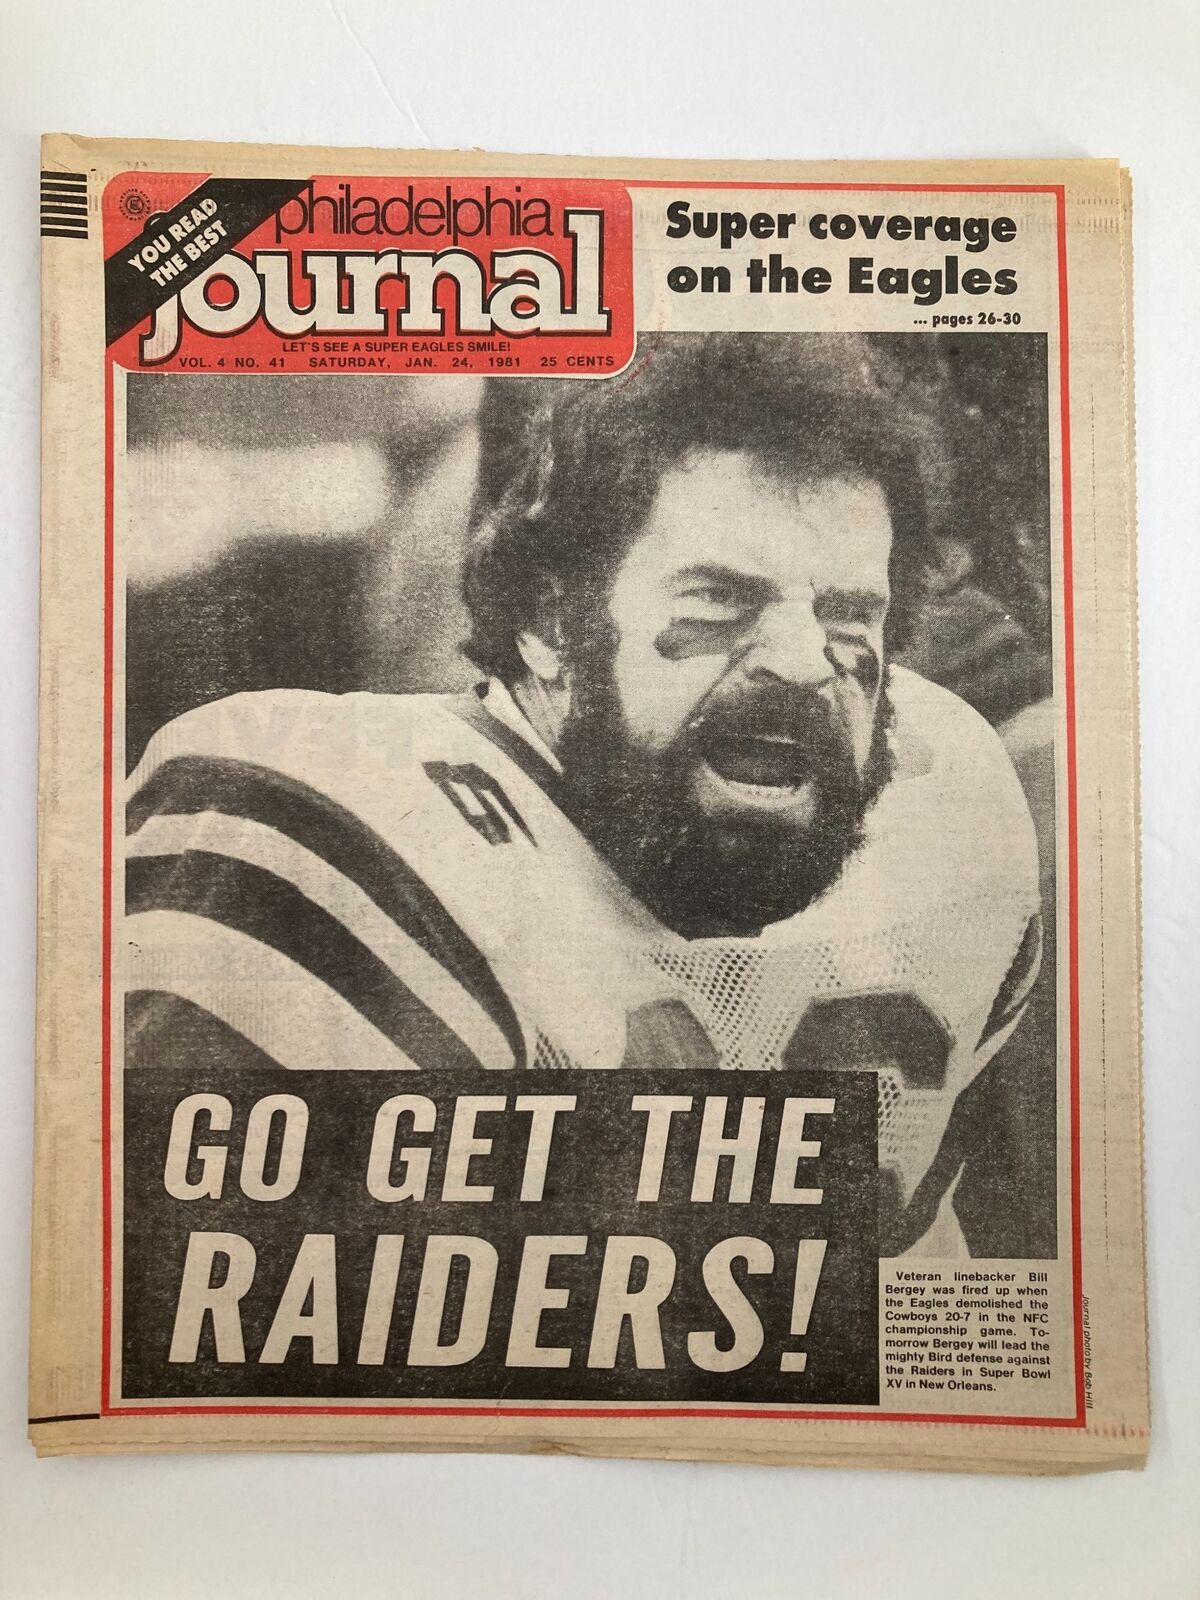 Philadelphia Journal Tabloid January 24 1981 Vol 4 #41 NFL Eagles Bill Bergey